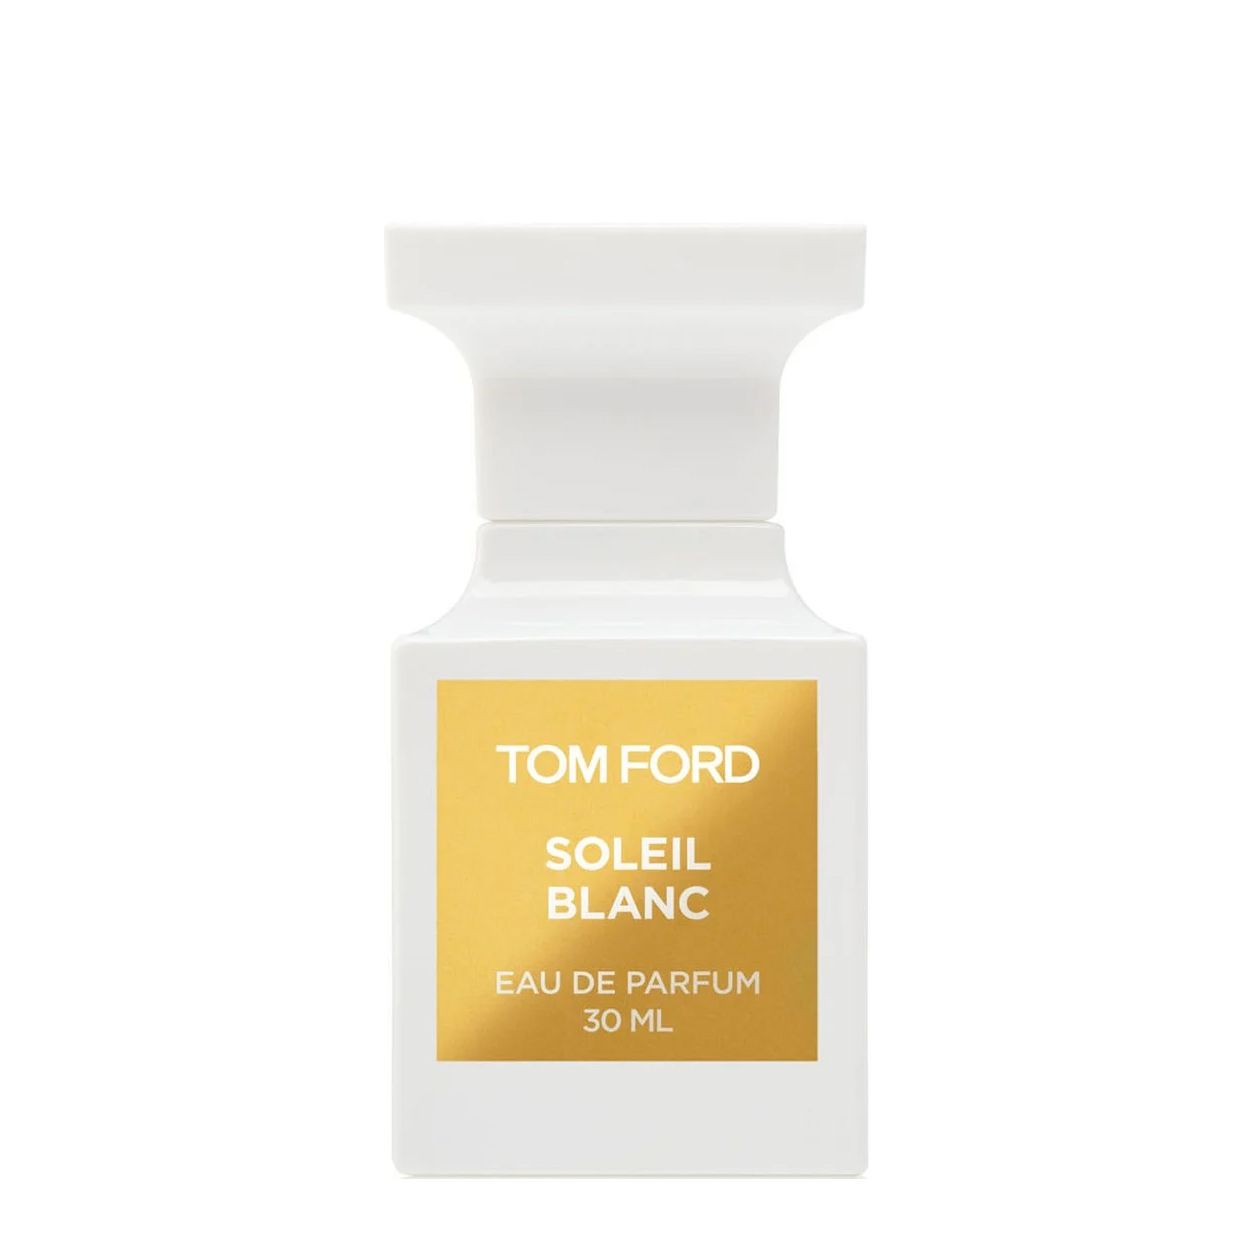 Вода парфюмерная Tom Ford Soleil Blanc, унисекс, 30 мл tom ford eau de soleil blanc 50